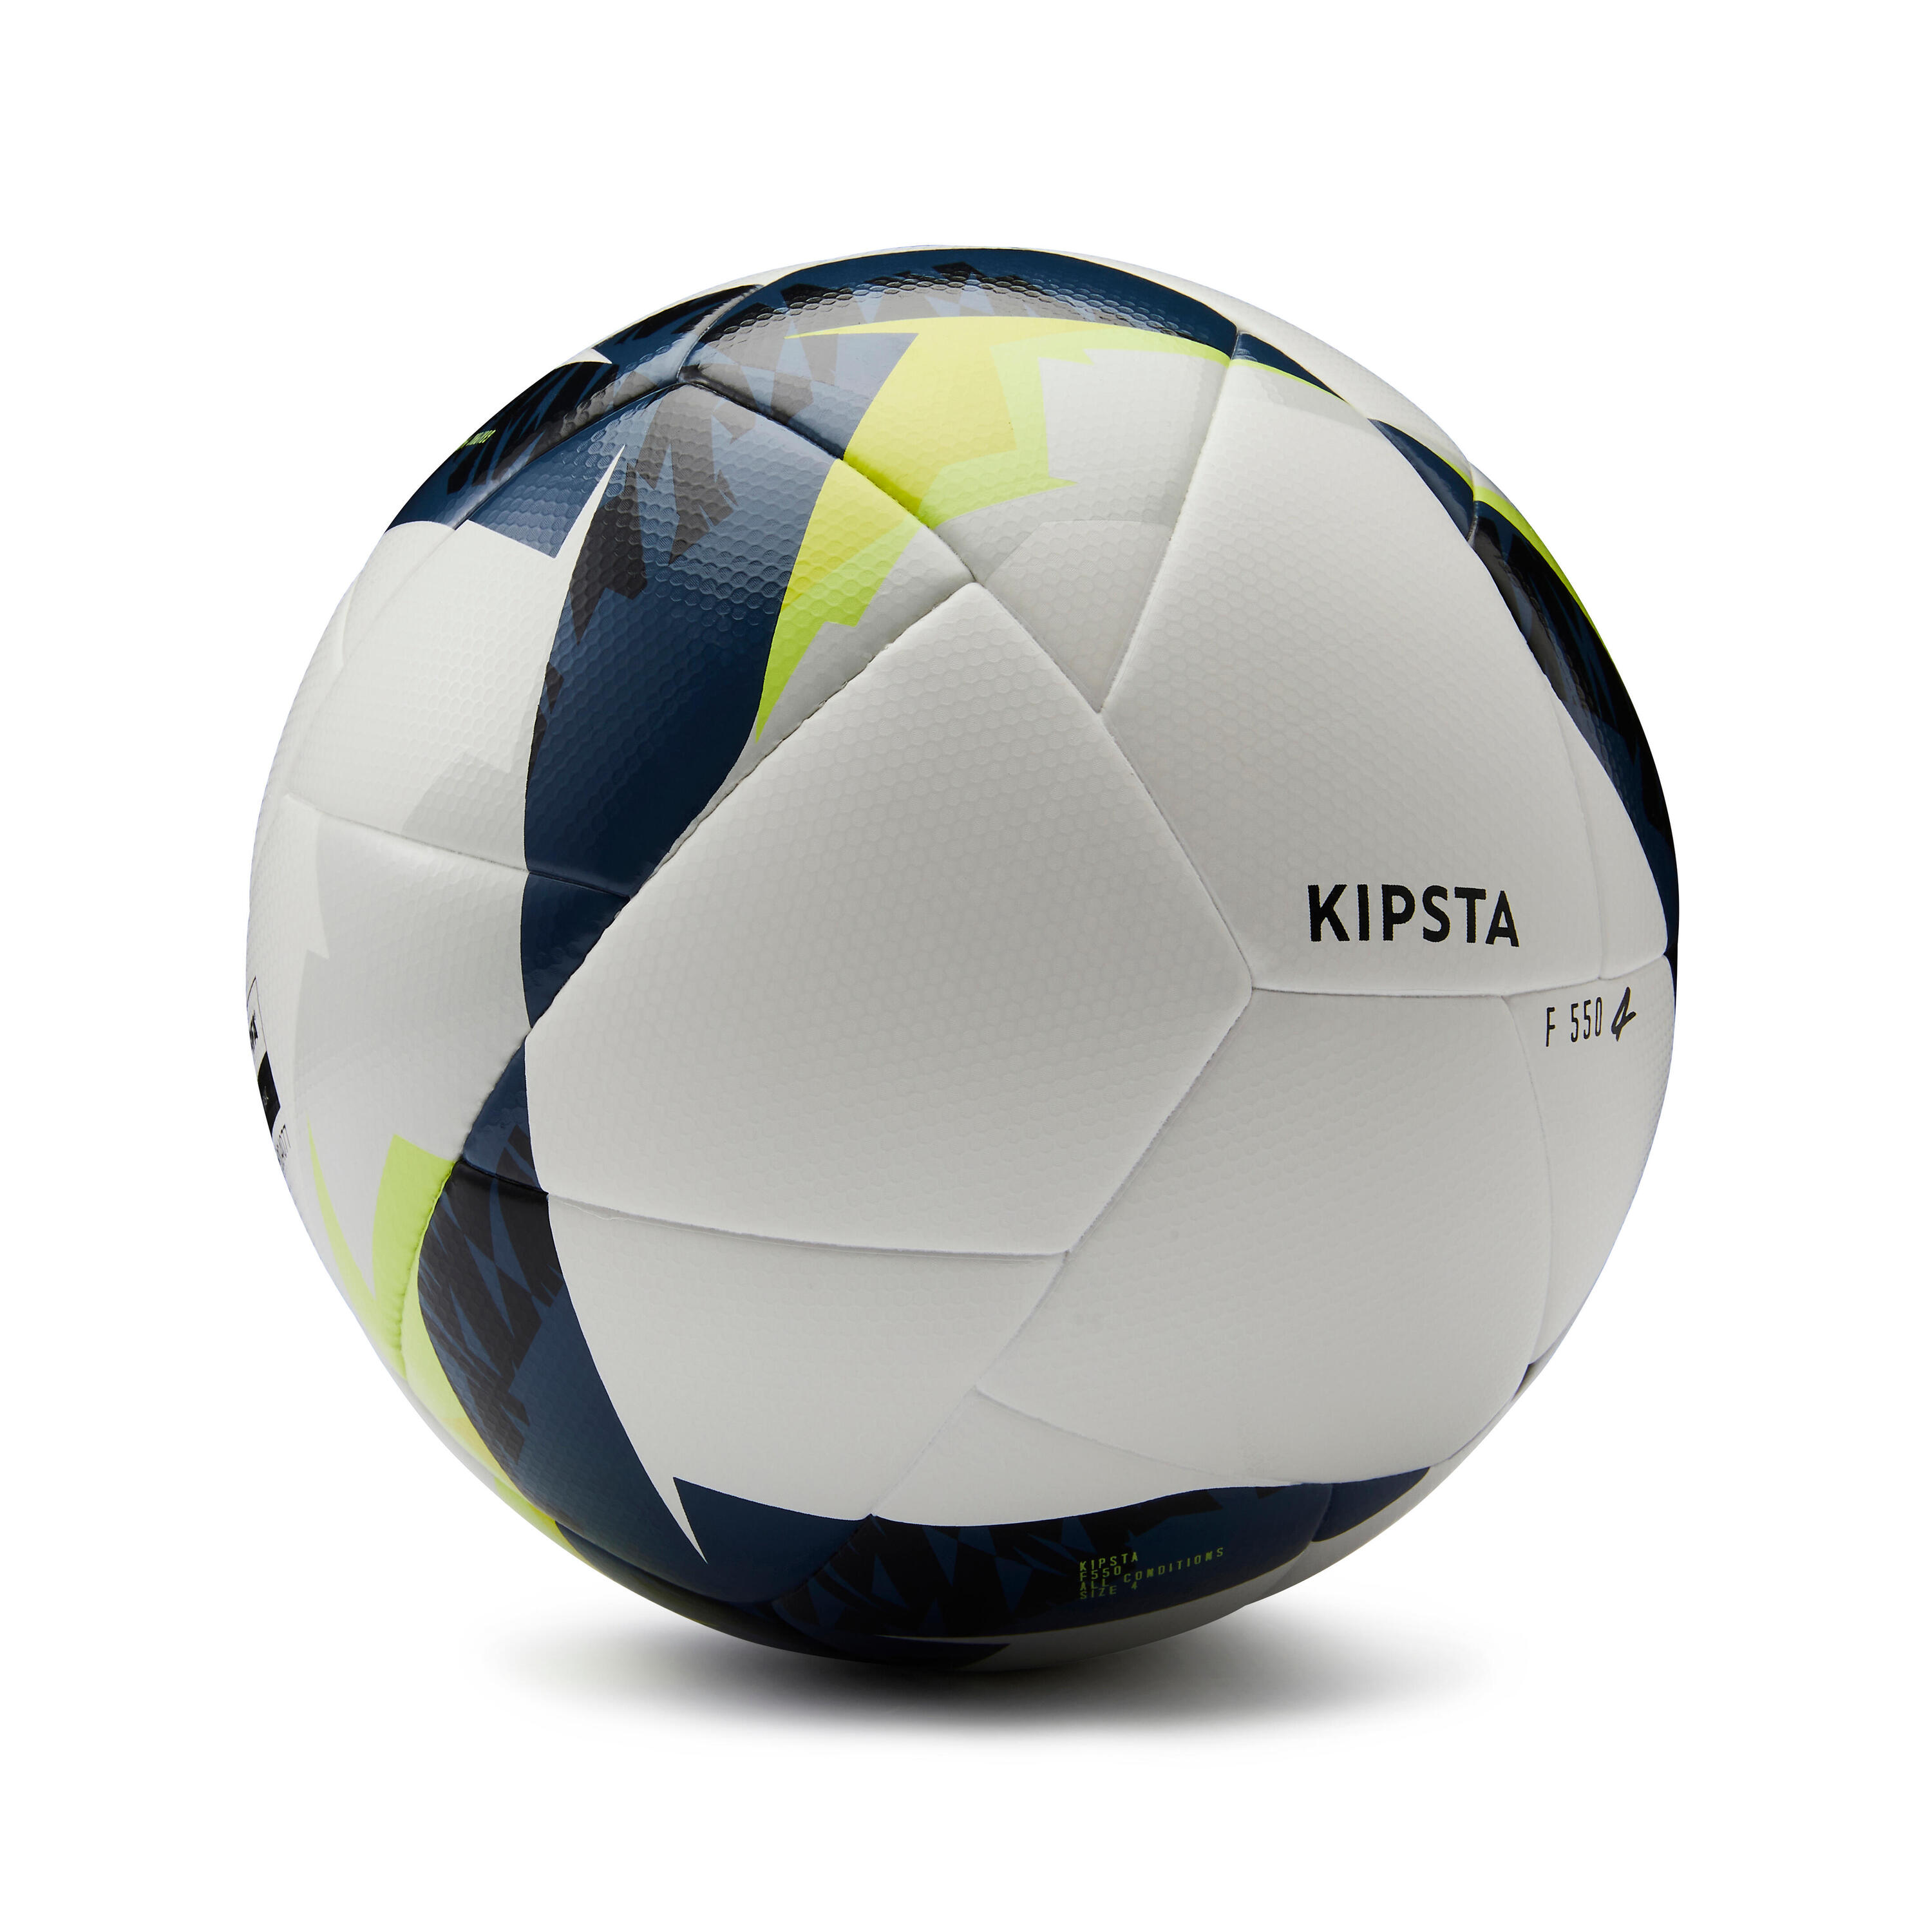 Hybrid Football FIFA Basic F550 Size 4 - White/Yellow 1/7